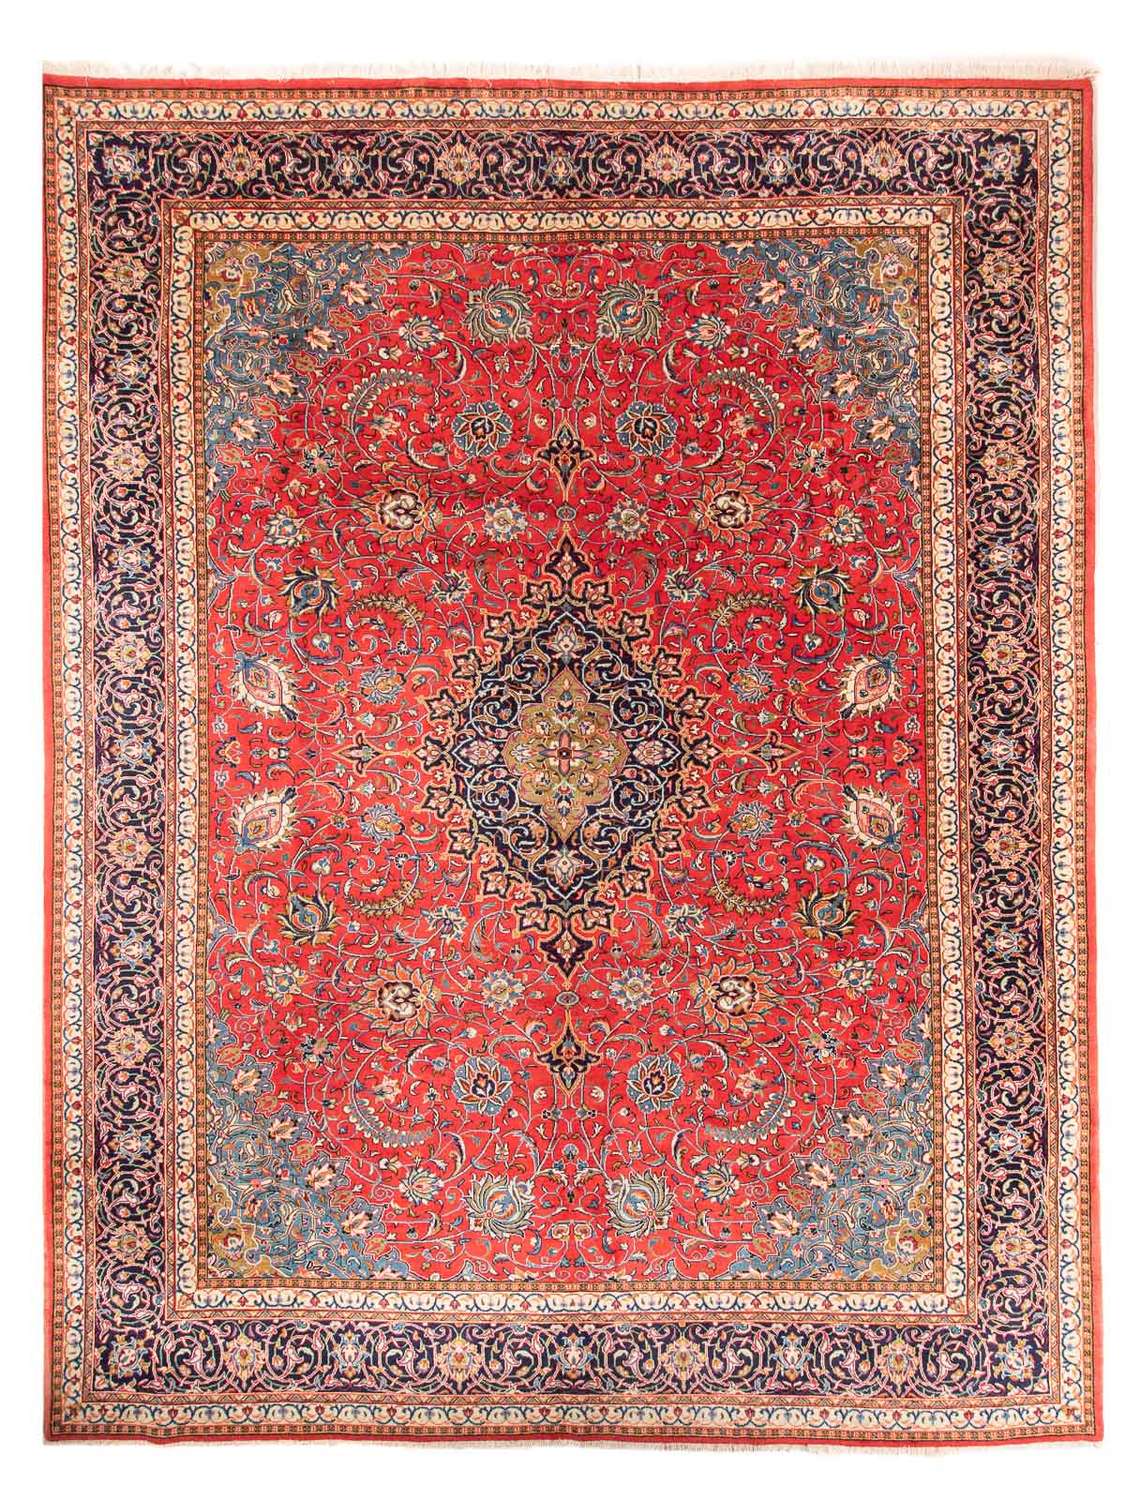 Tapis persan - Classique - 397 x 305 cm - rouge